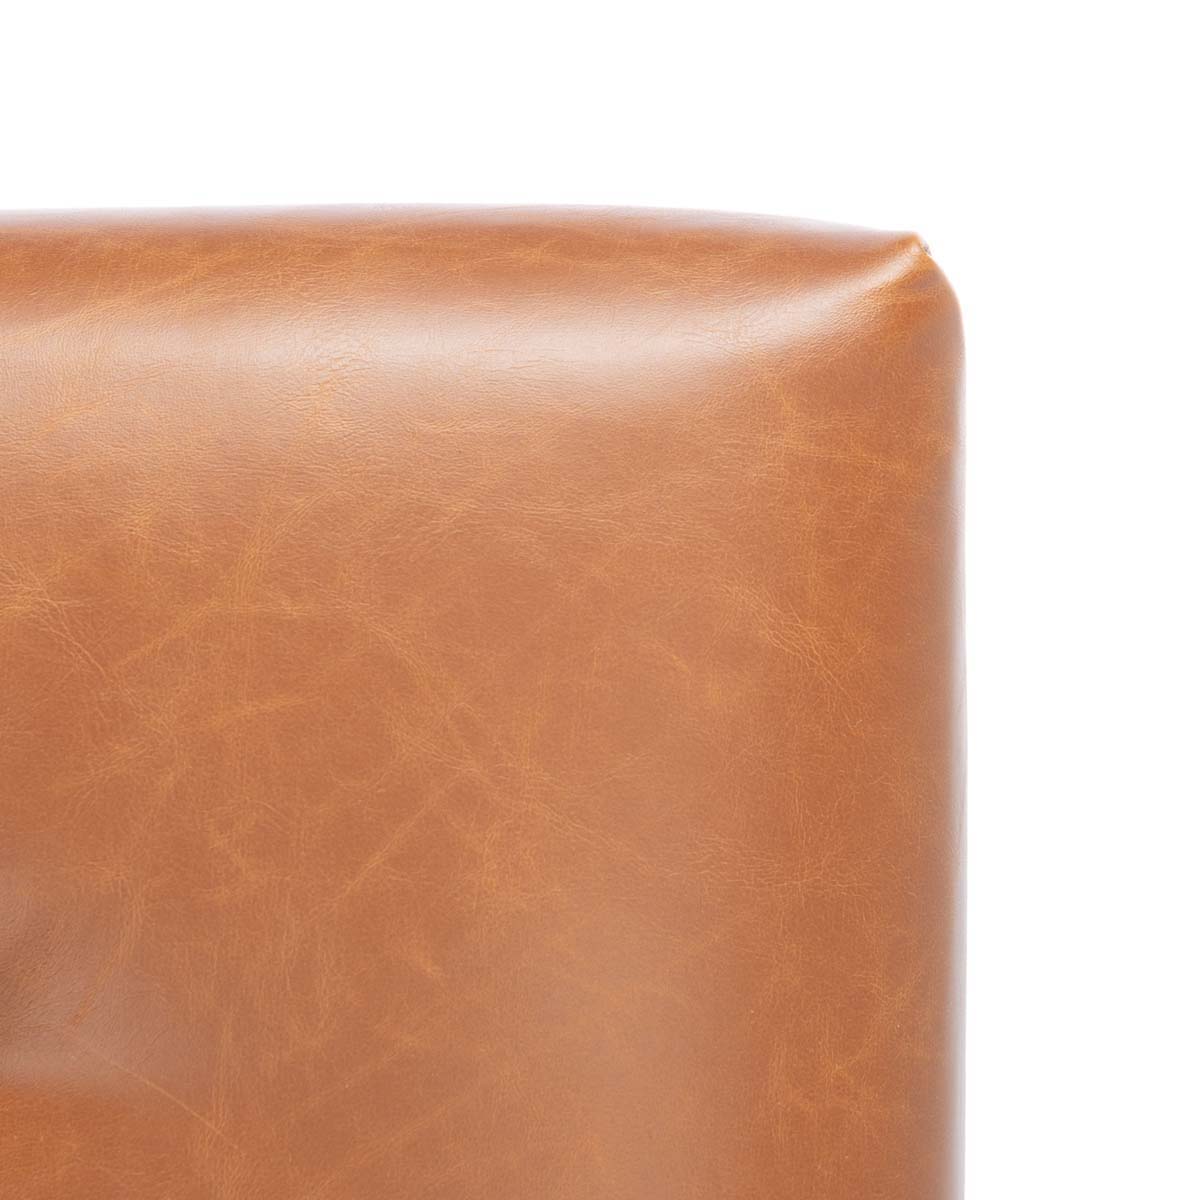 Safavieh Roald Sofa Accent Chair , ACH6209 - Light Brown / Antique Coffee